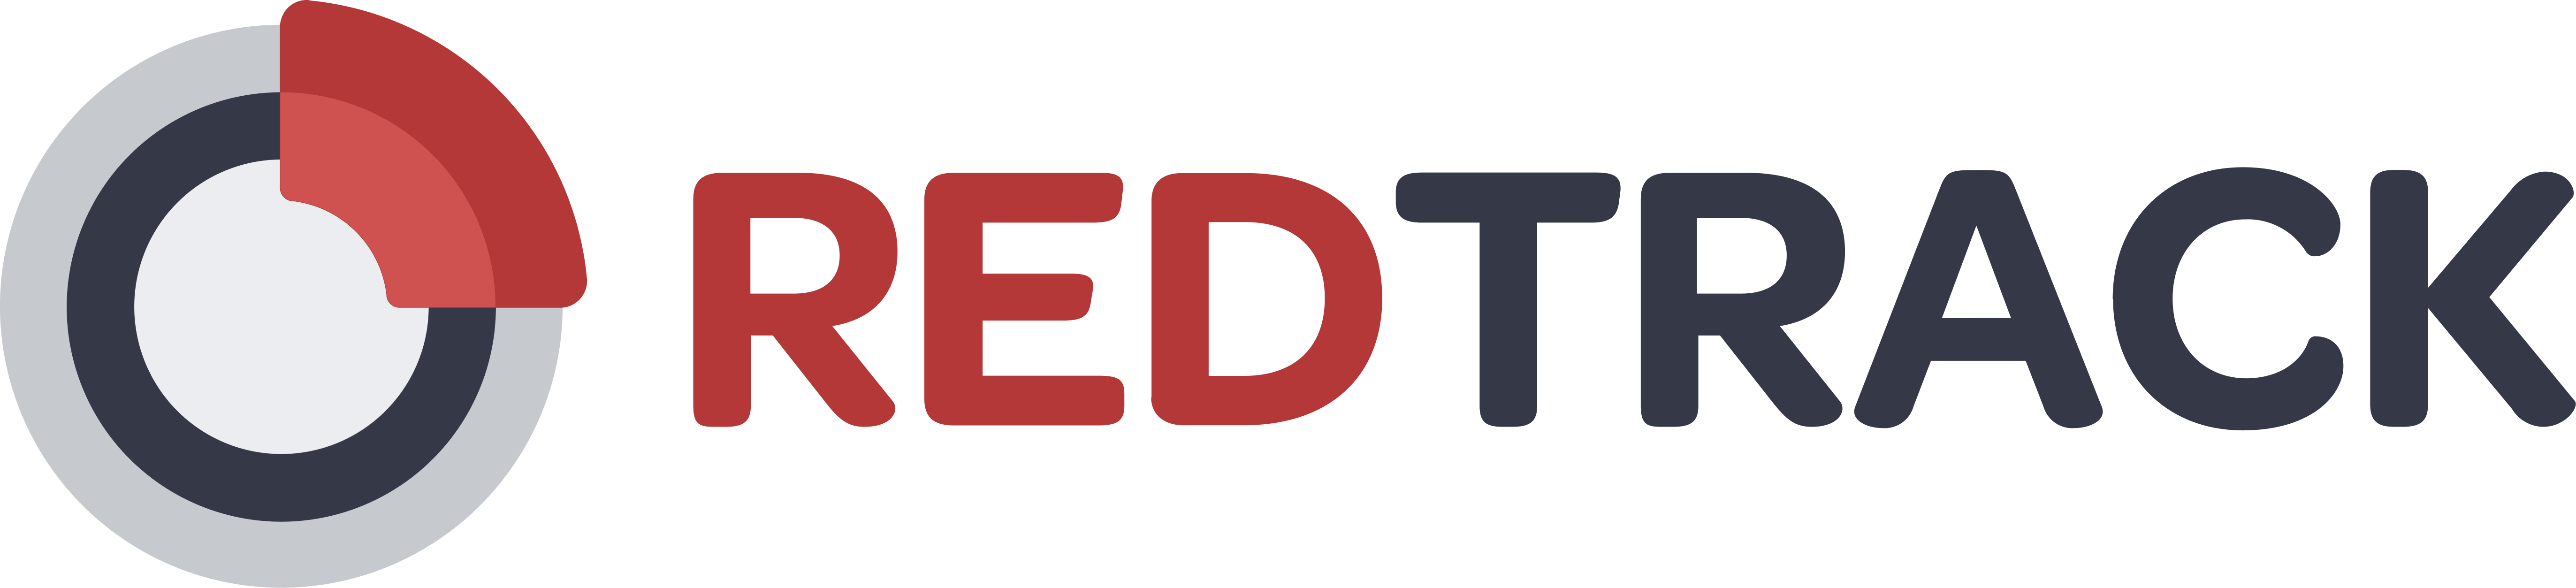 RedTrack.io logo